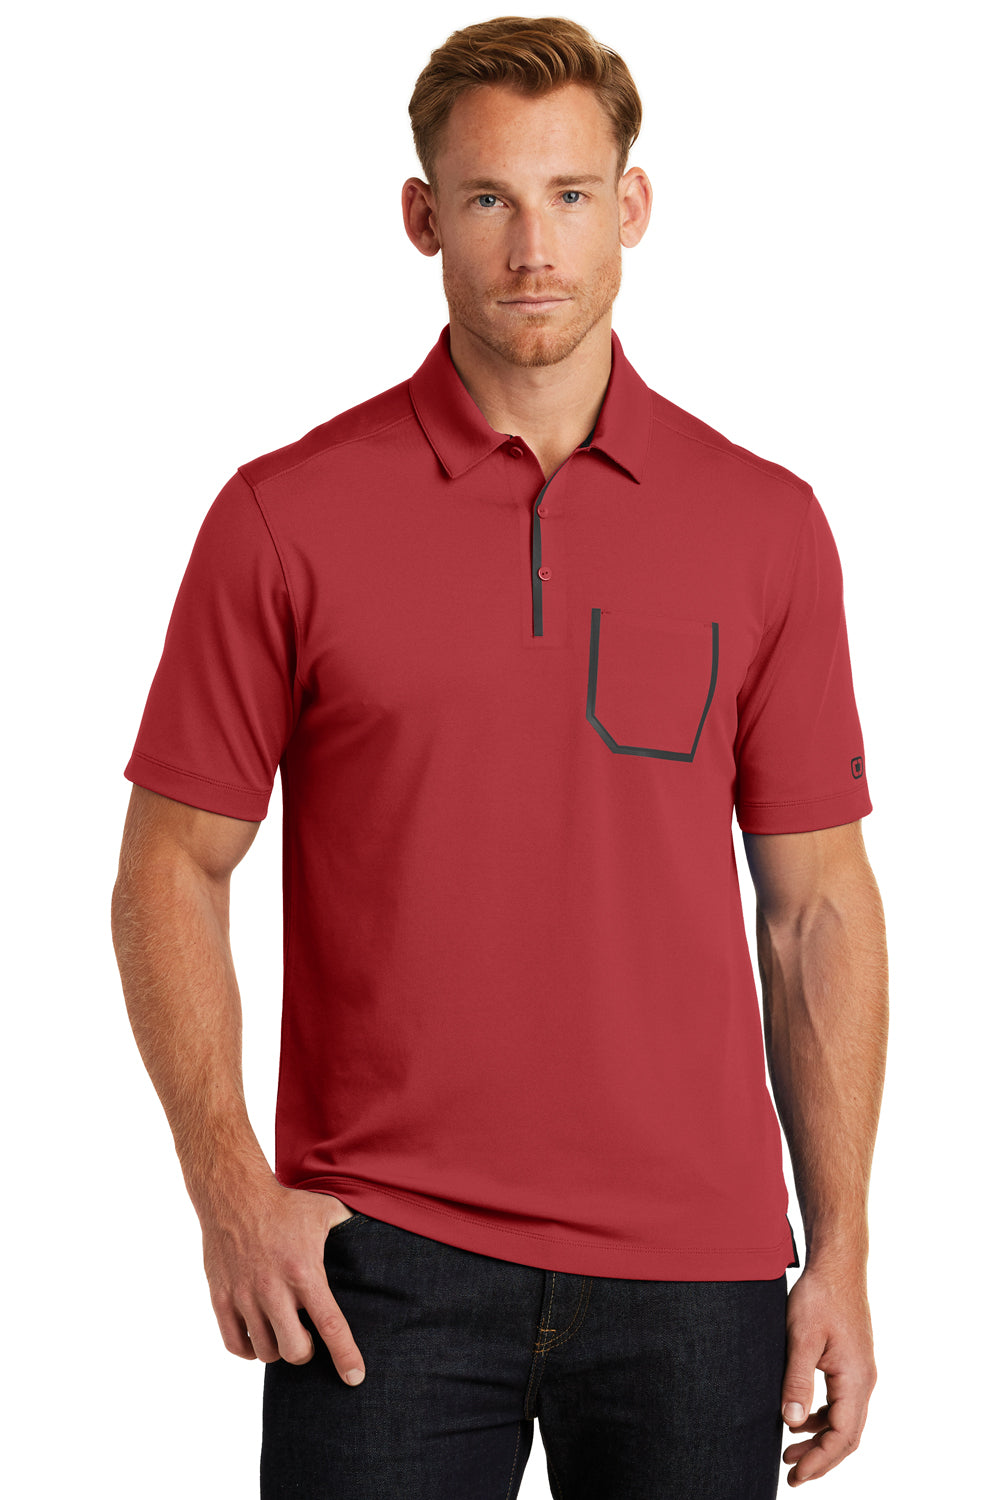 Ogio OG131 Mens Fuse Moisture Wicking Short Sleeve Polo Shirt w/ Pocket Red Front